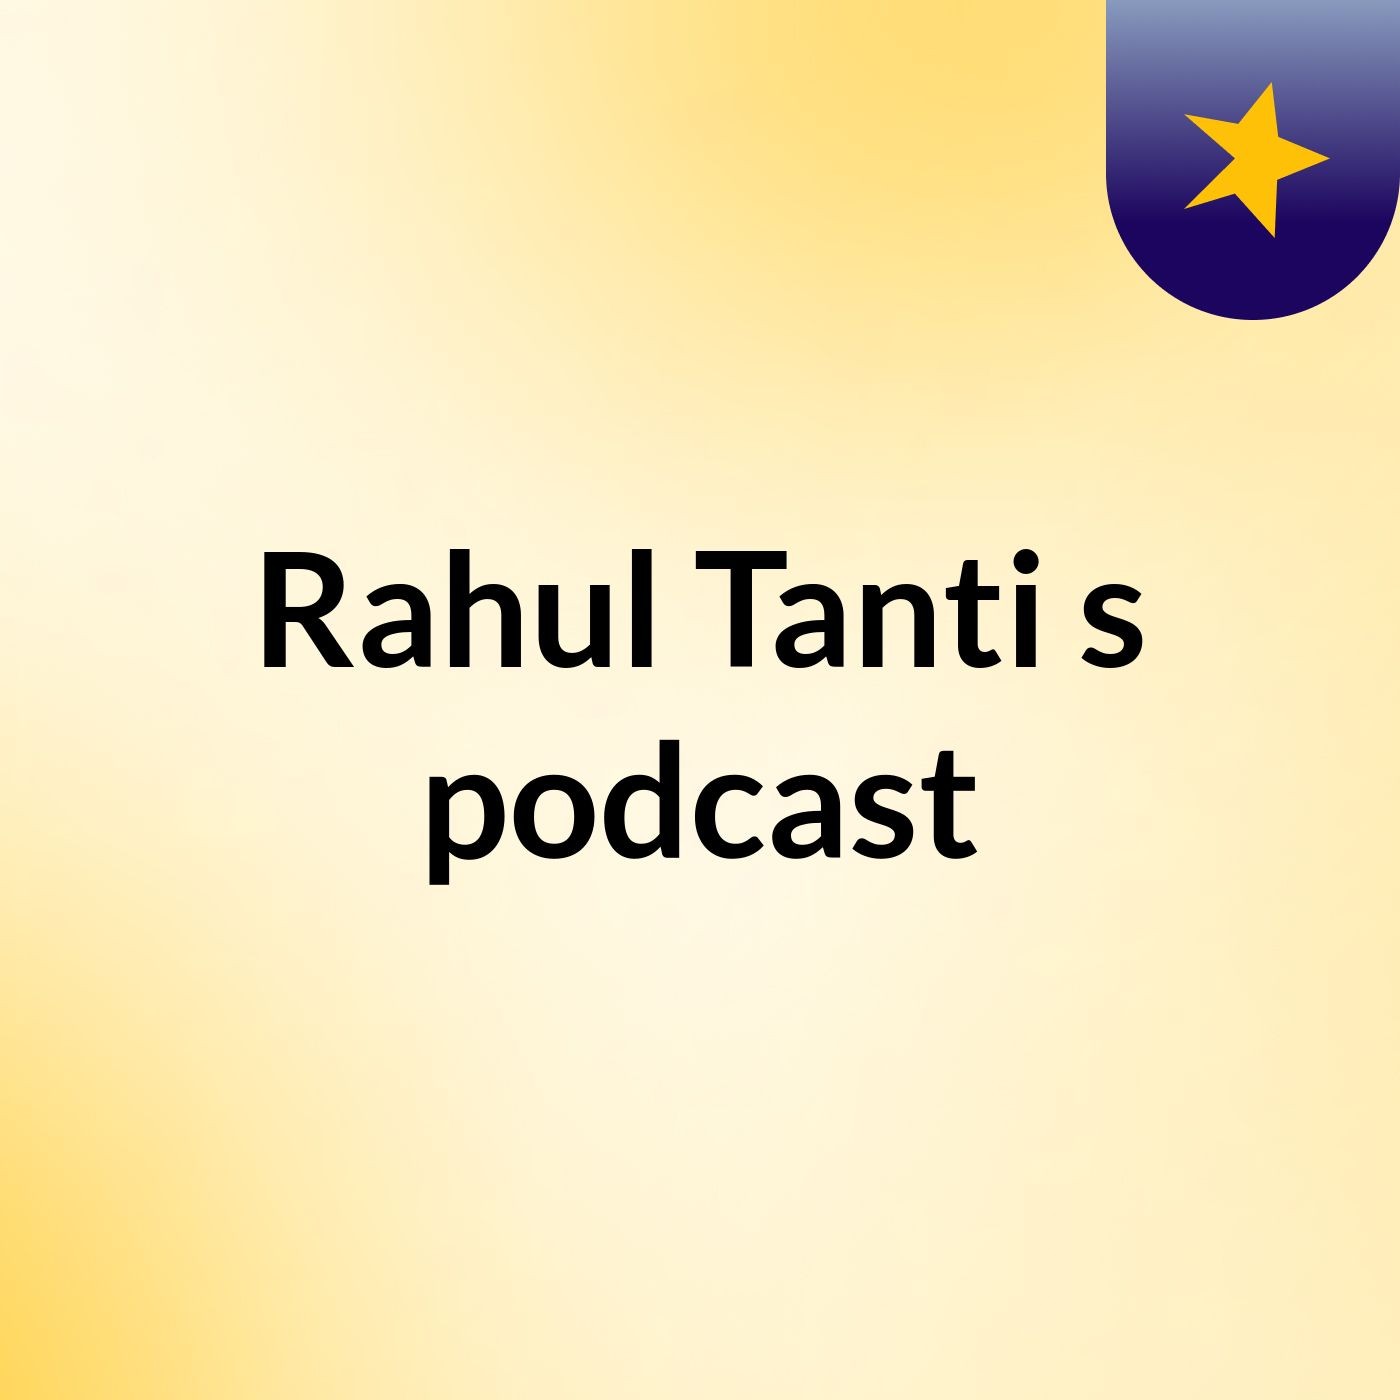 Rahul Tanti's podcast